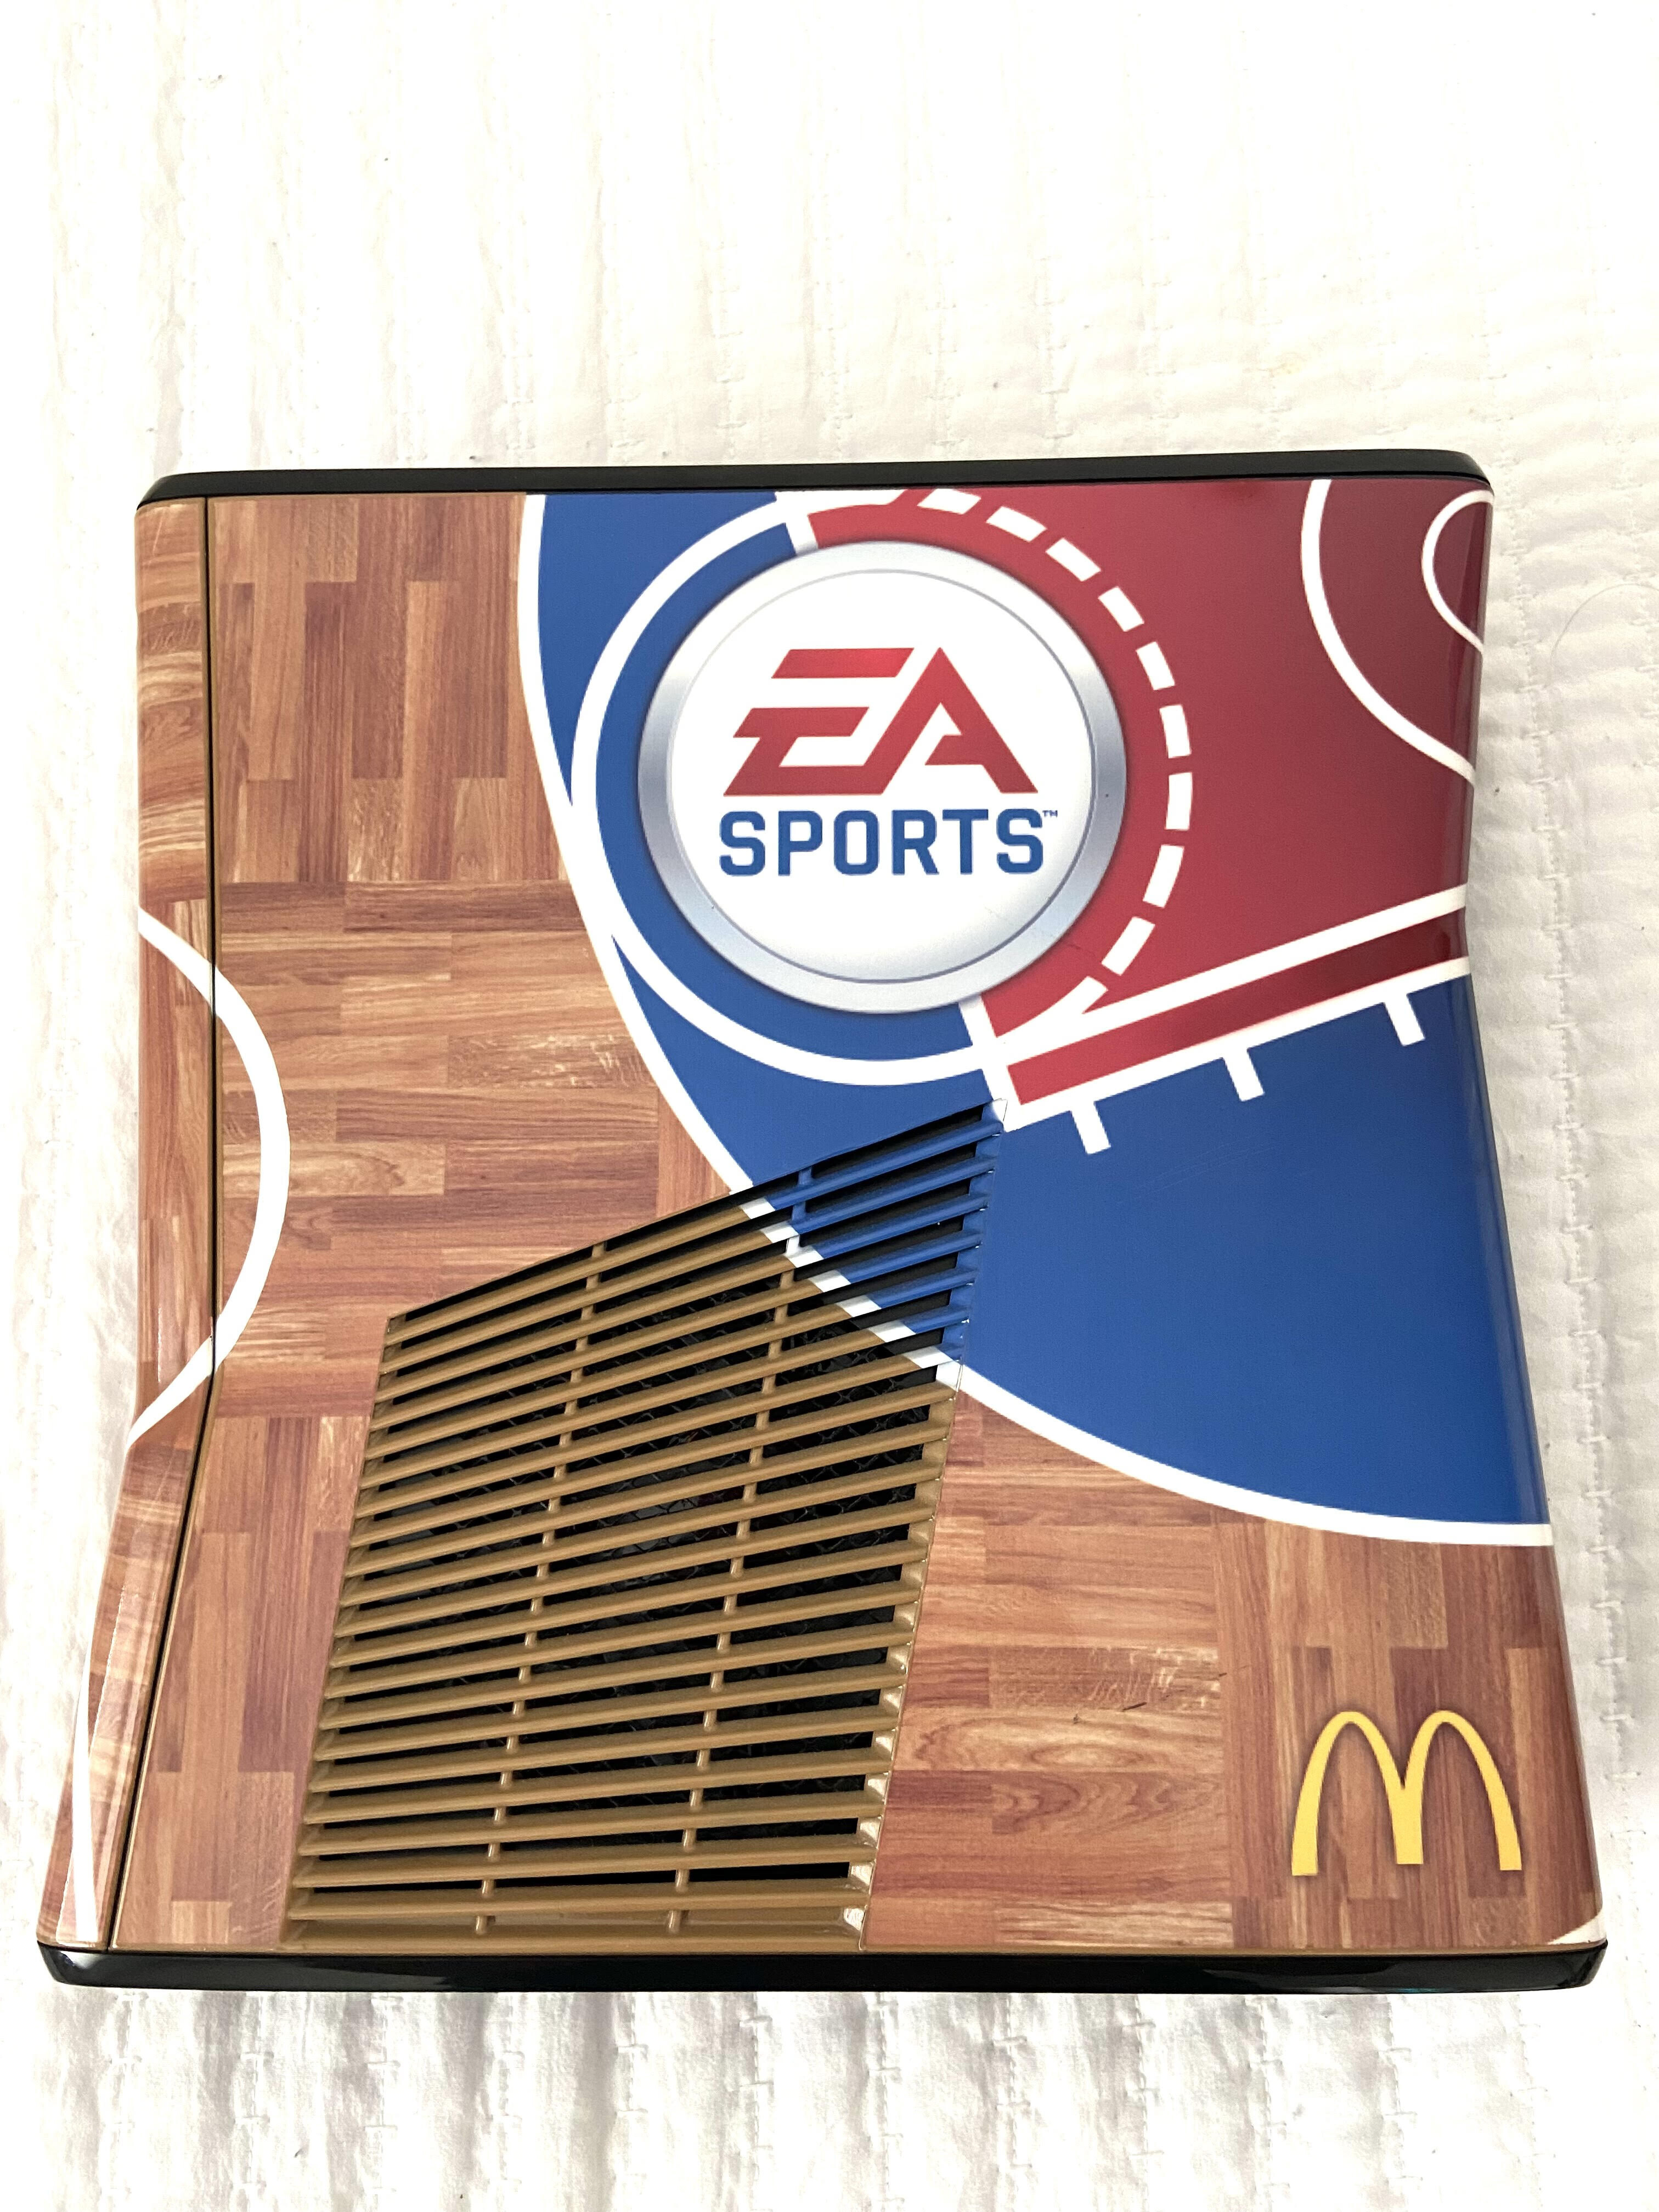  Microsoft Xbox 360 EA Sports McDonalds Basketball Console